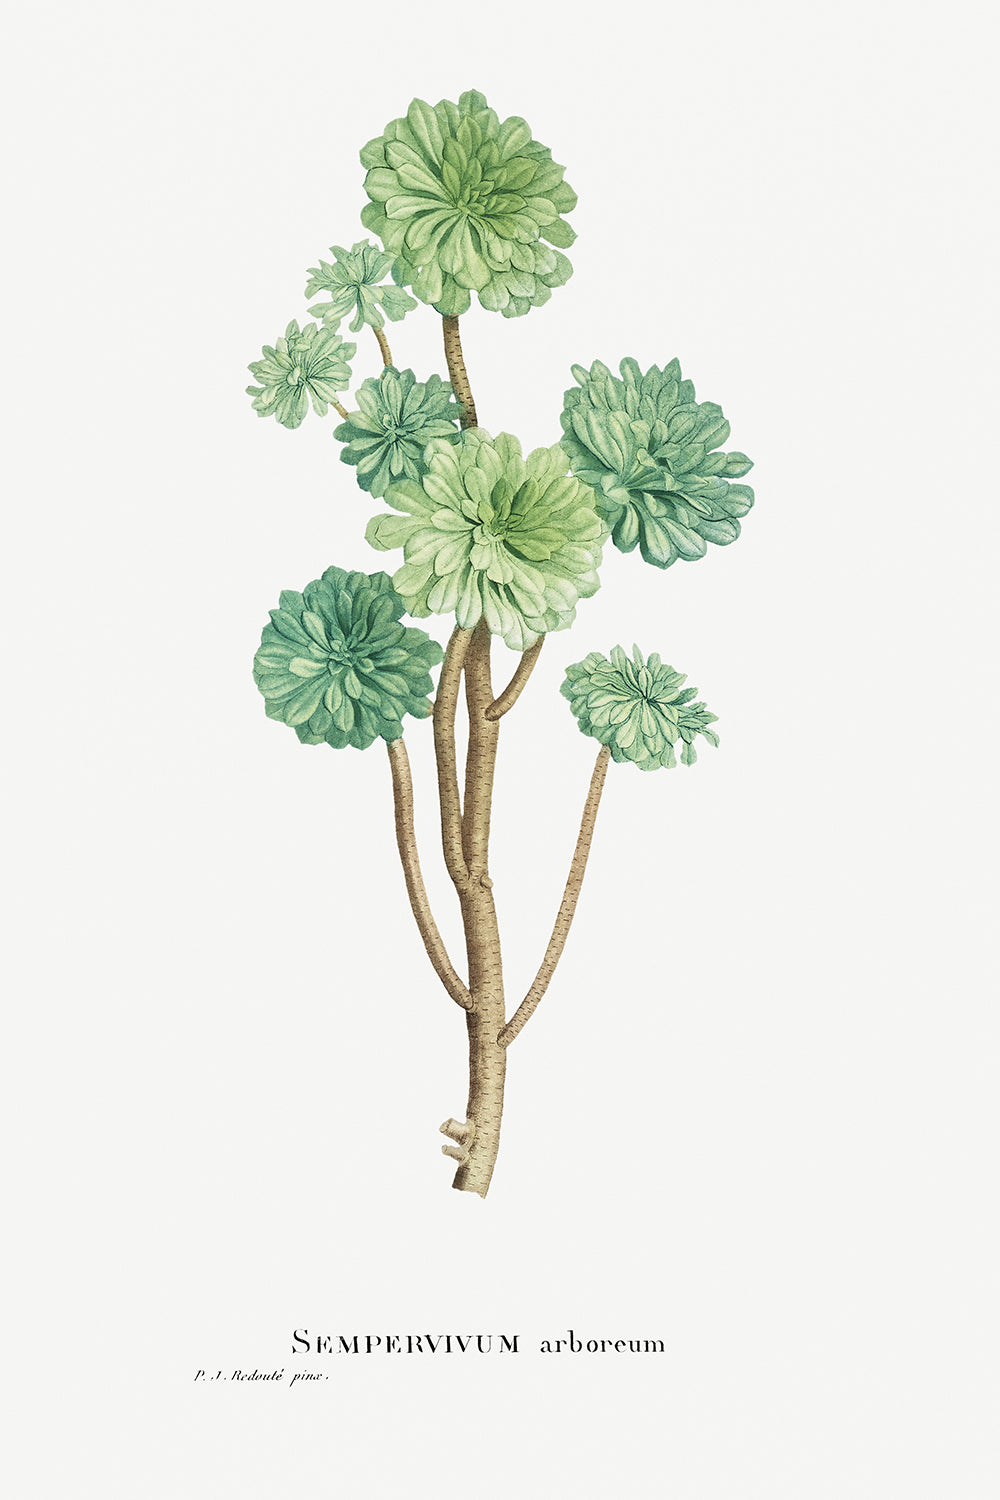 Botanical Plant Print - Sempervivum Arboreum (Tree Houseleek) by Pierre Joseph Redoute